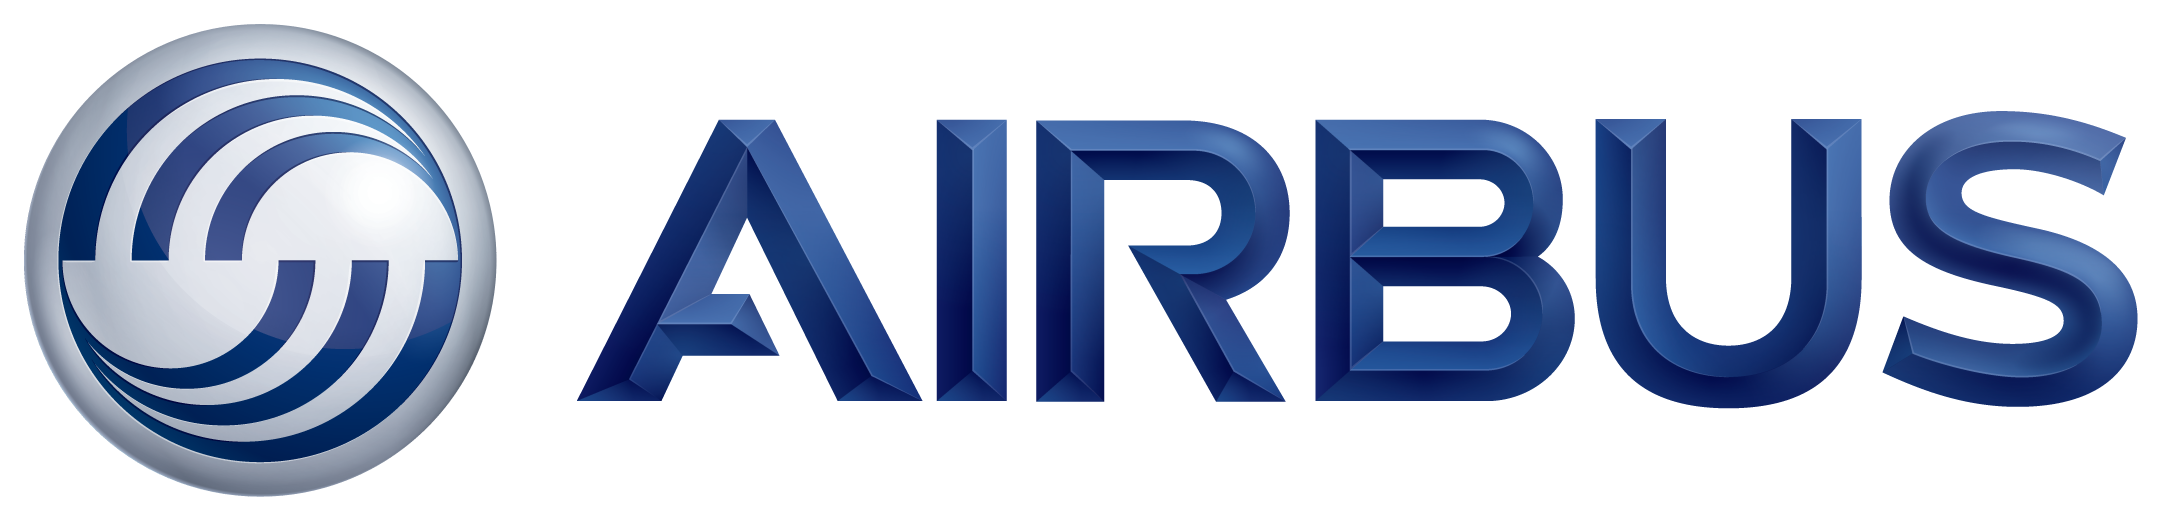 Resultado de imagen para airbus china logo